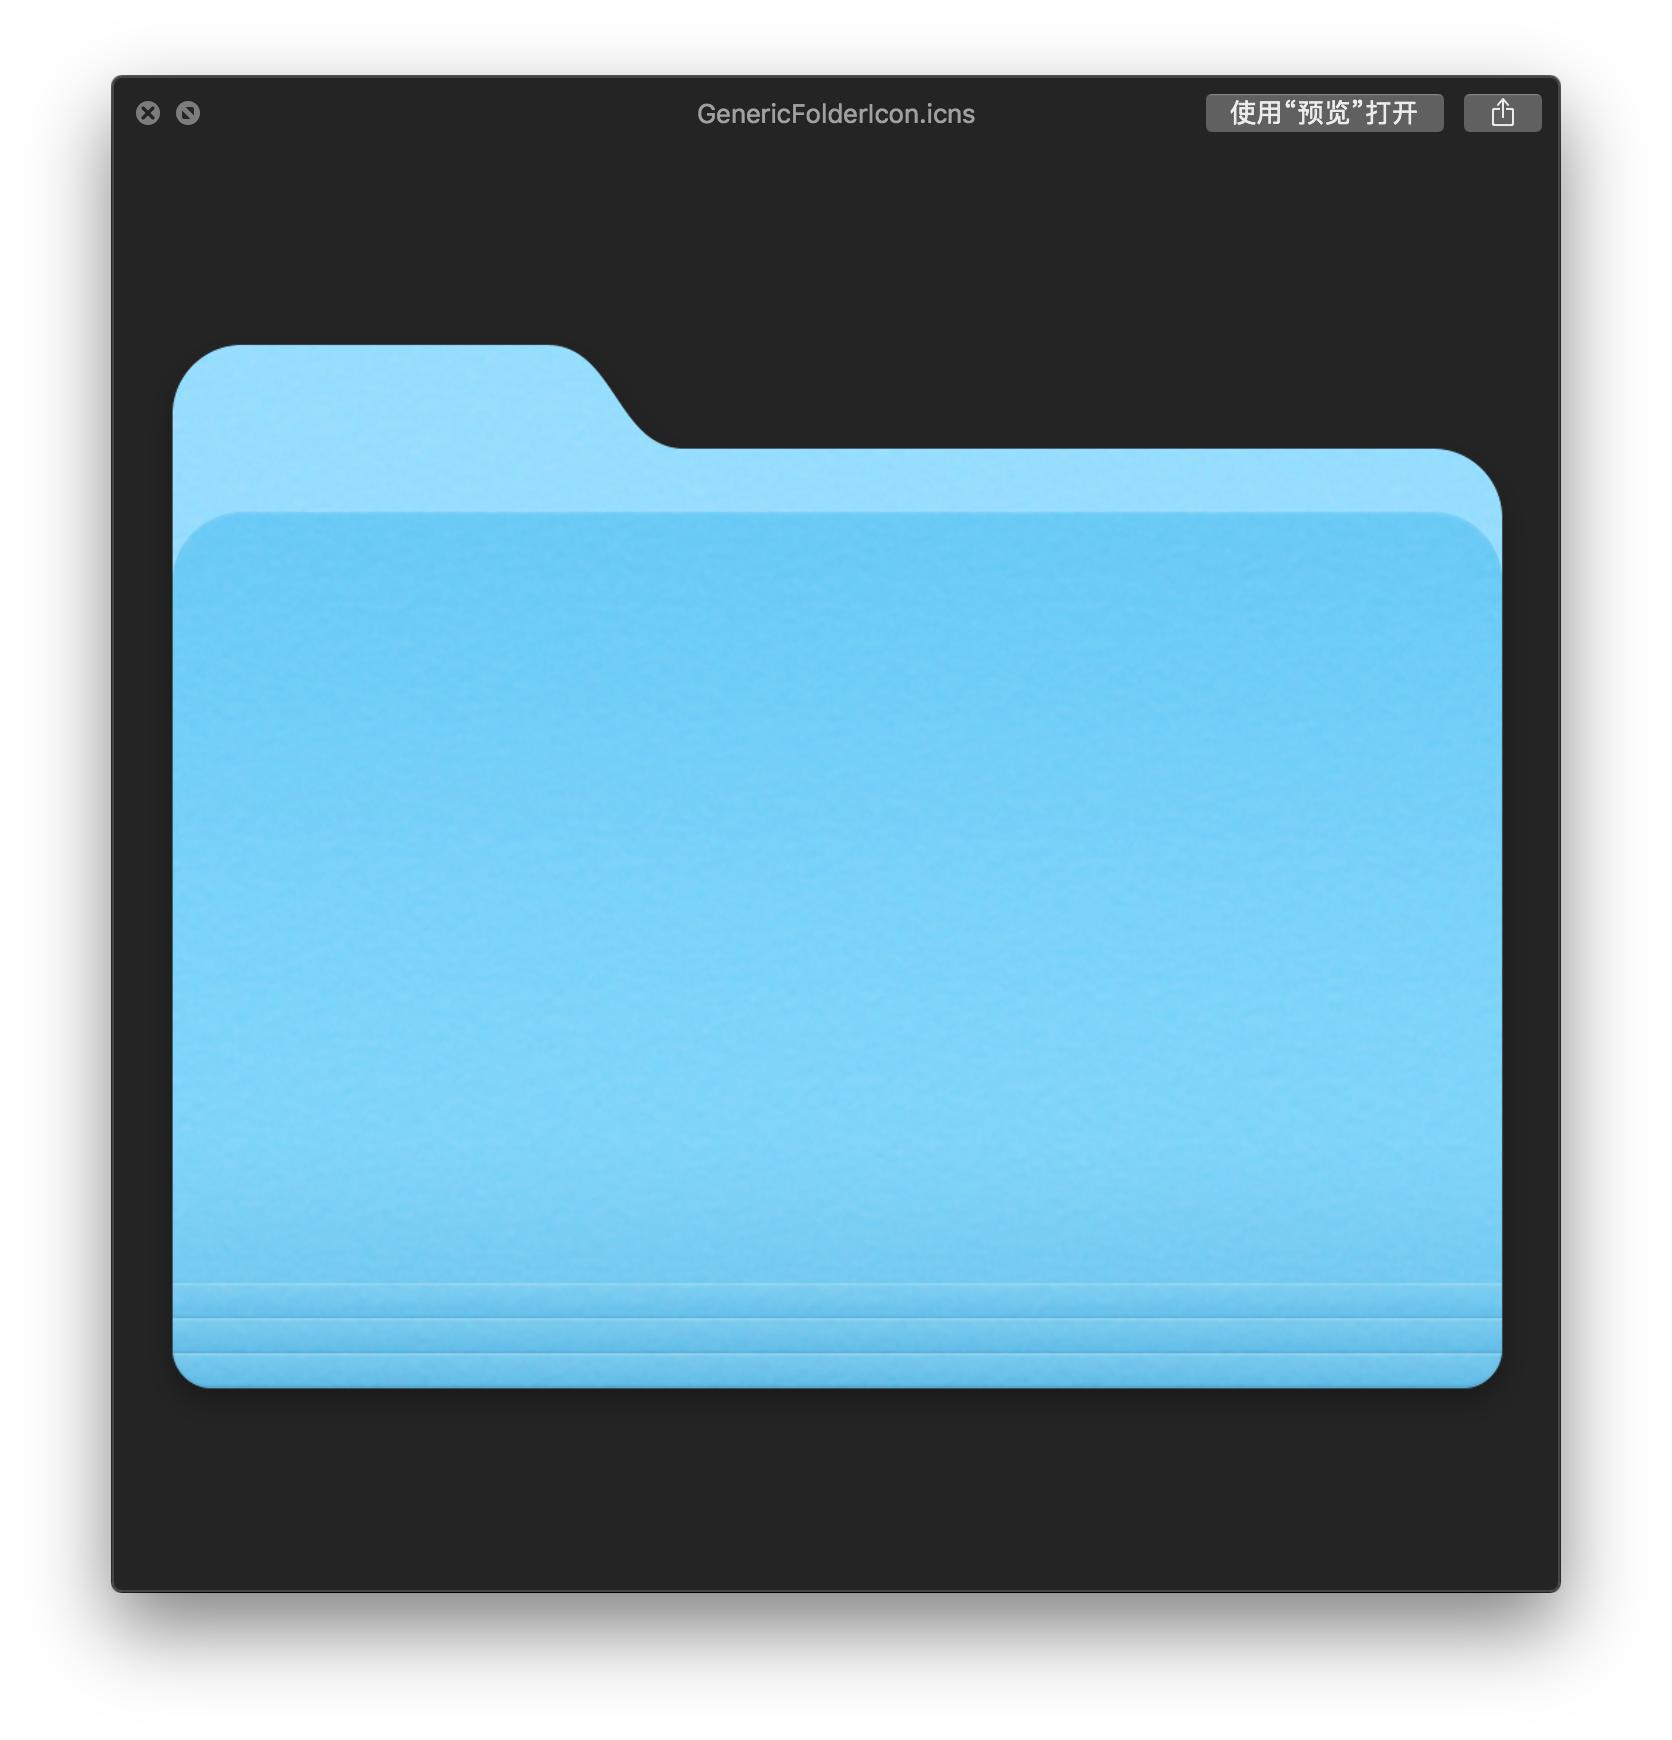 free macbook folder icons